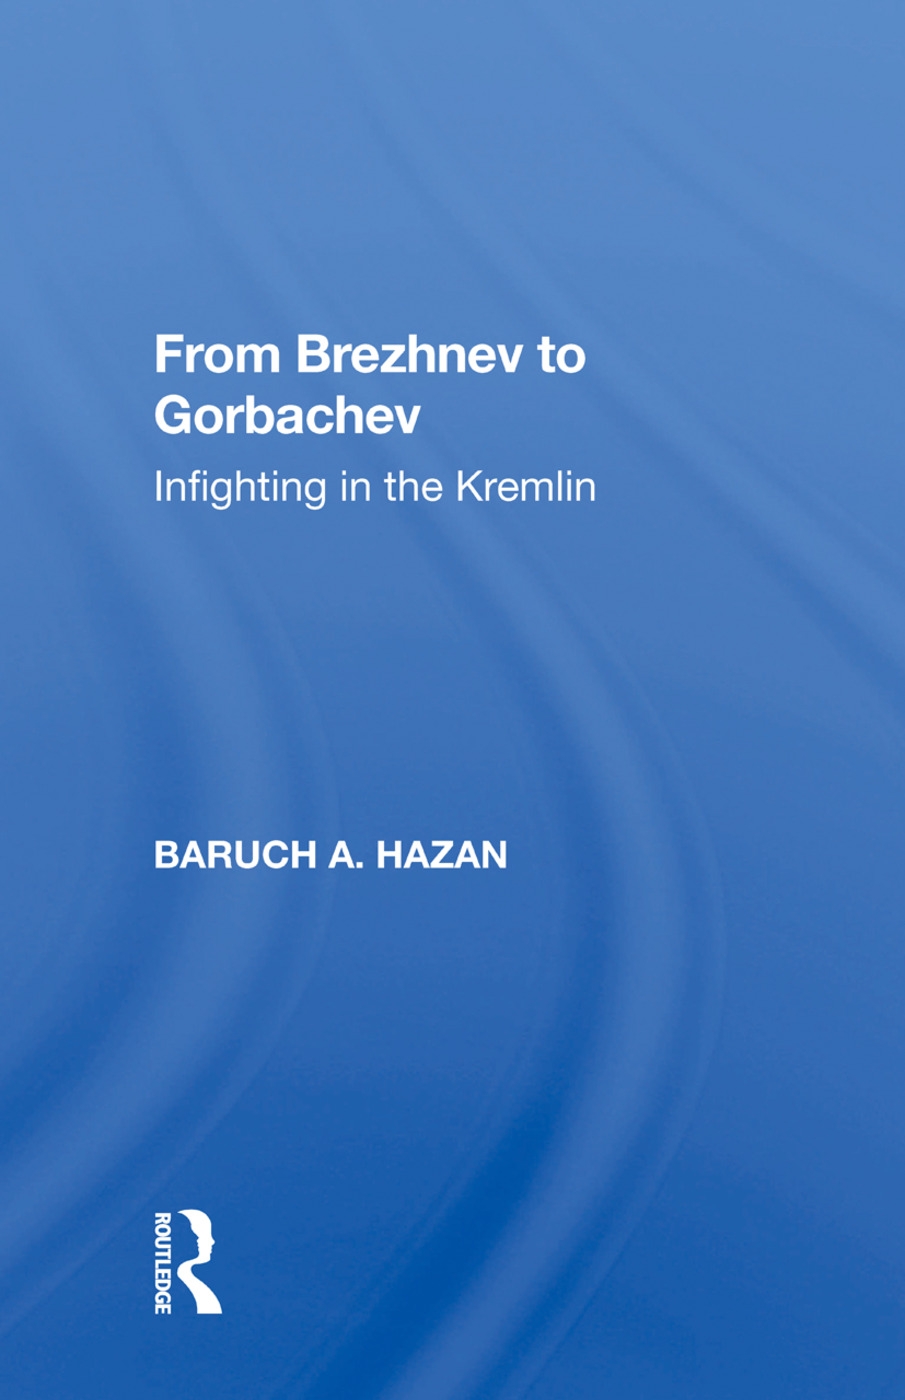 From Brezhnev to Gorbachev: Infighting in the Kremlin